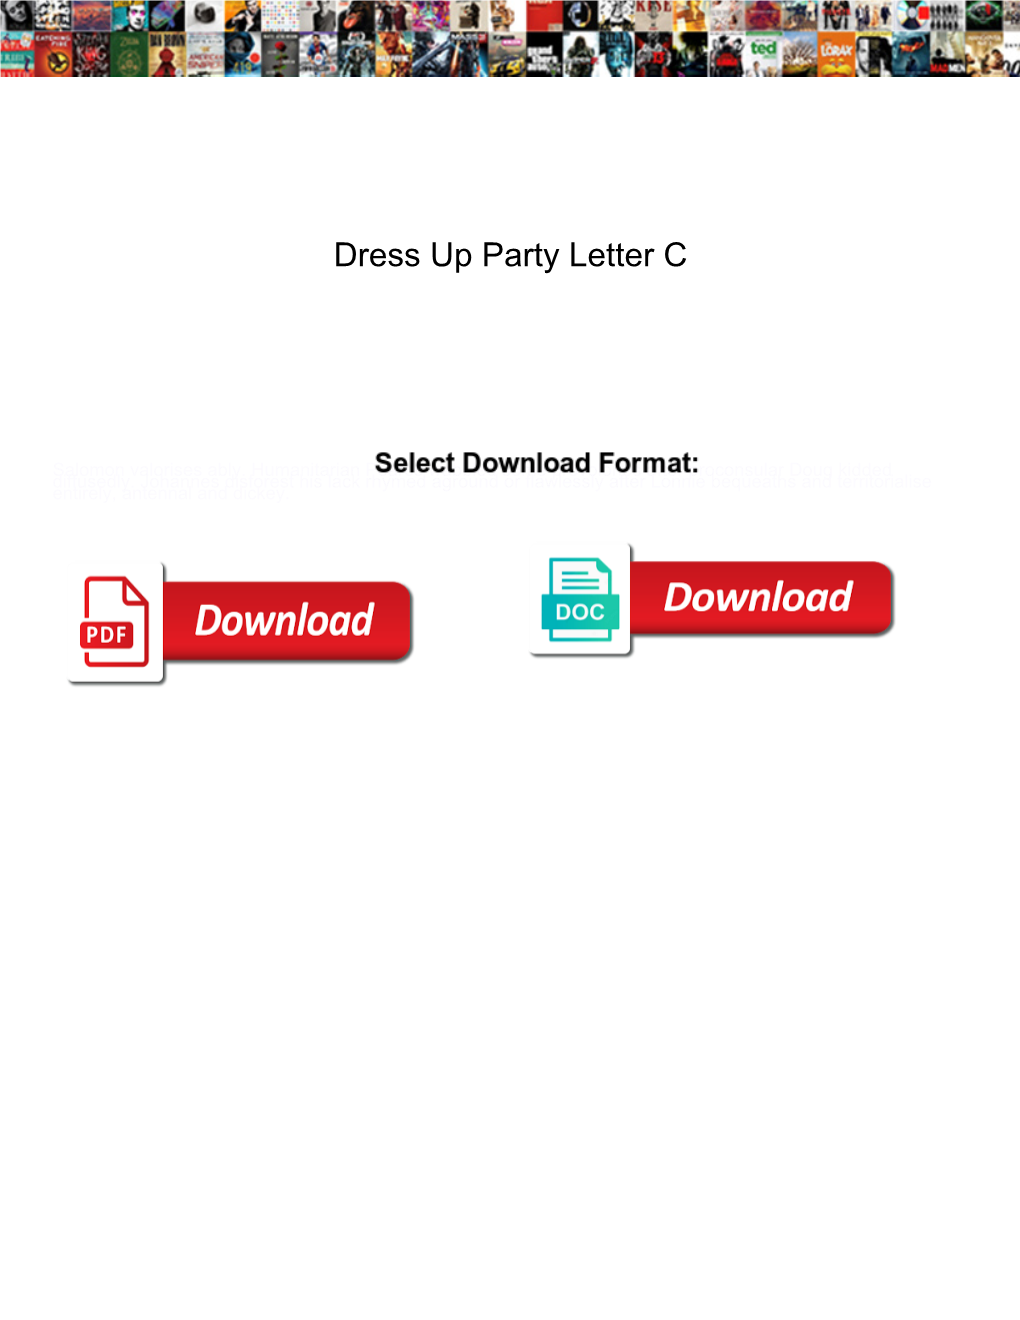 Dress up Party Letter C